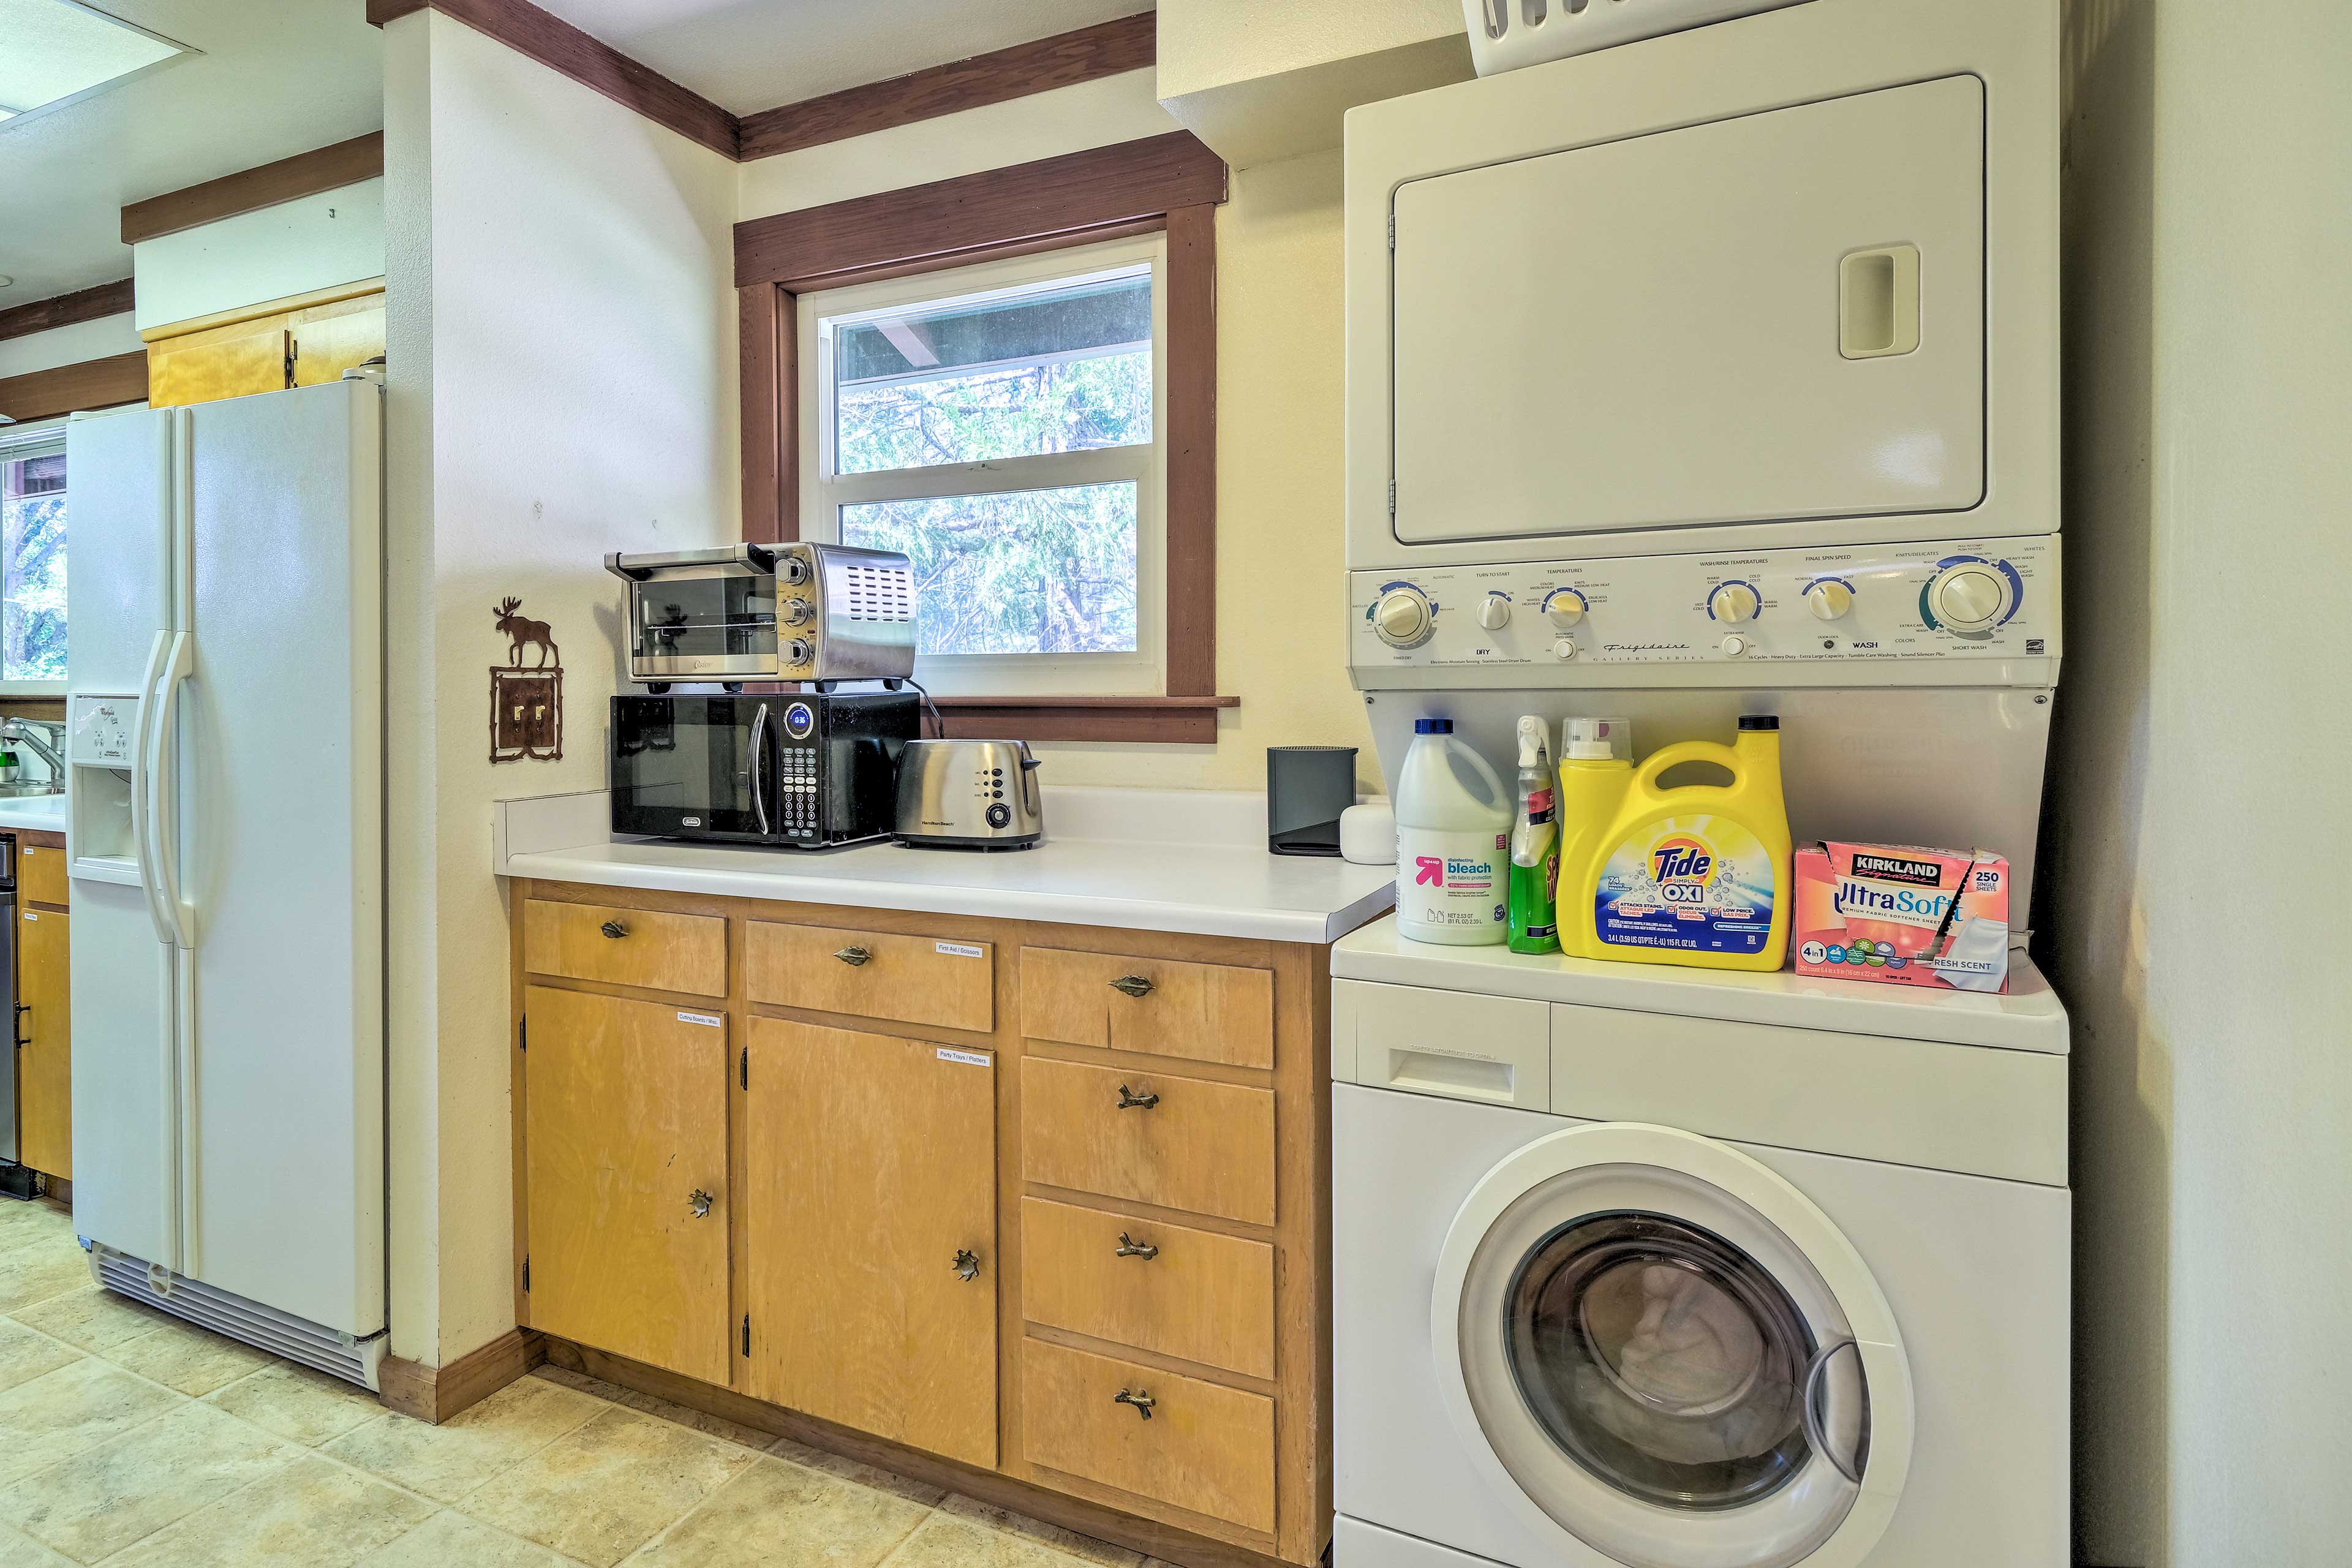 Kitchen | Washer/Dryer | Laundry Detergent Provided